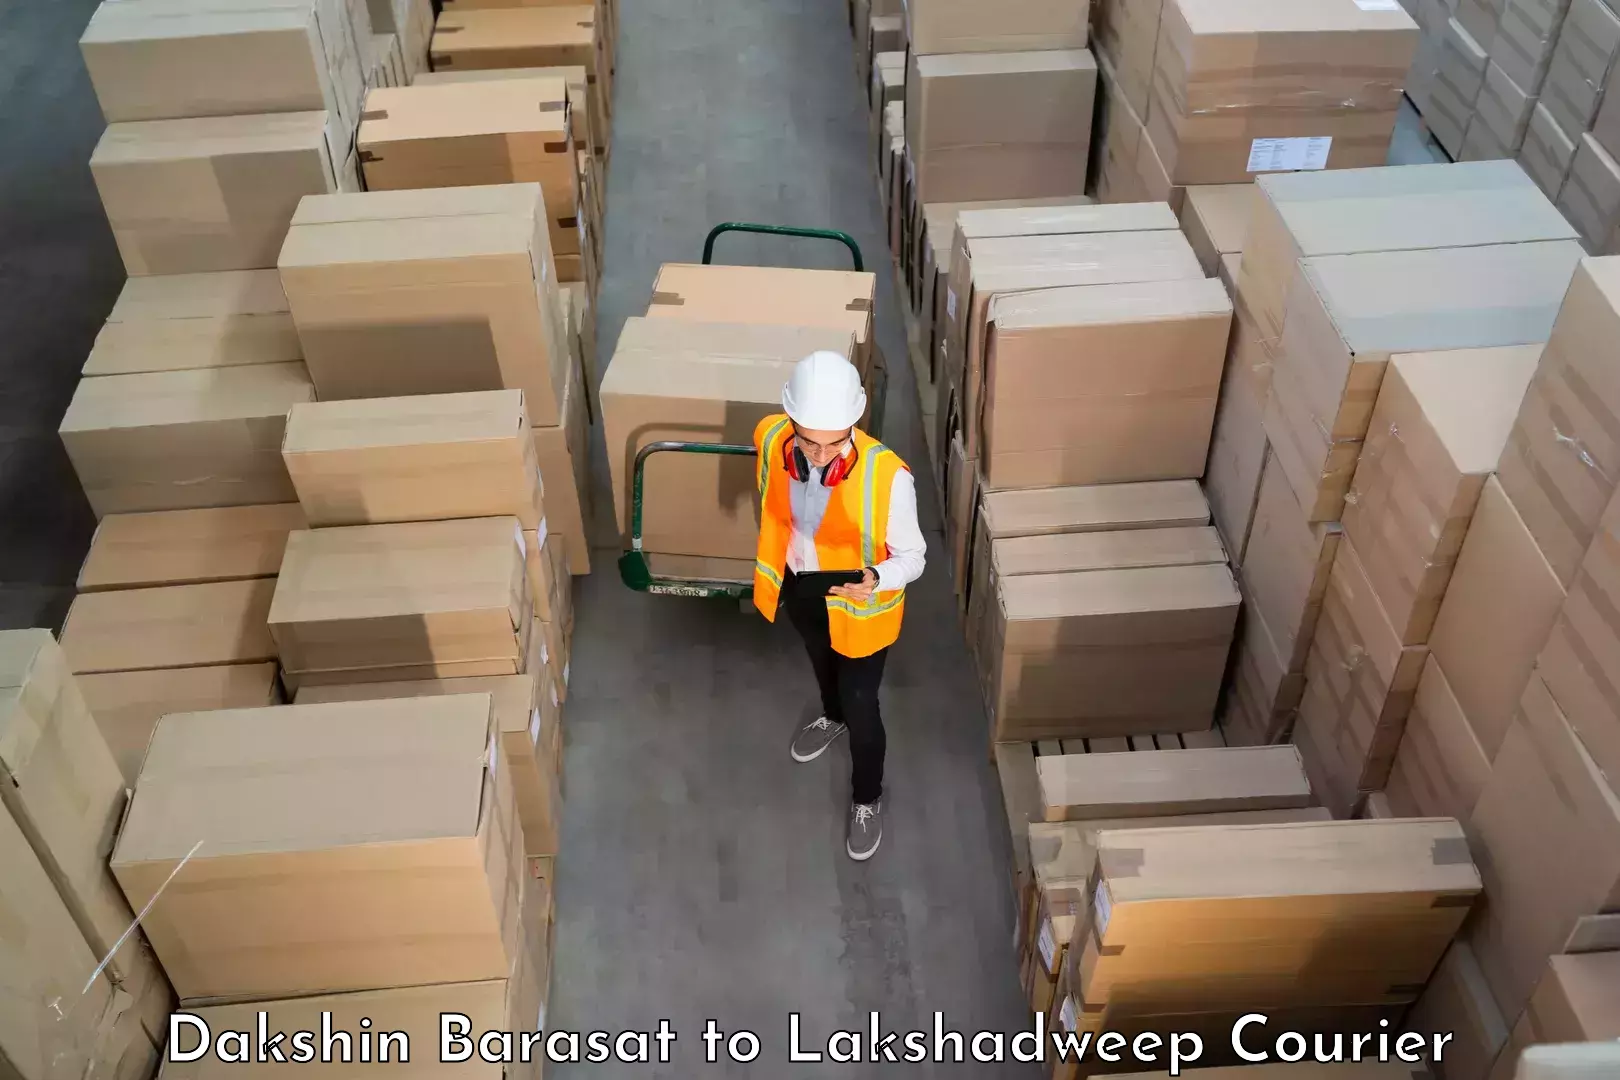 Furniture delivery service Dakshin Barasat to Lakshadweep